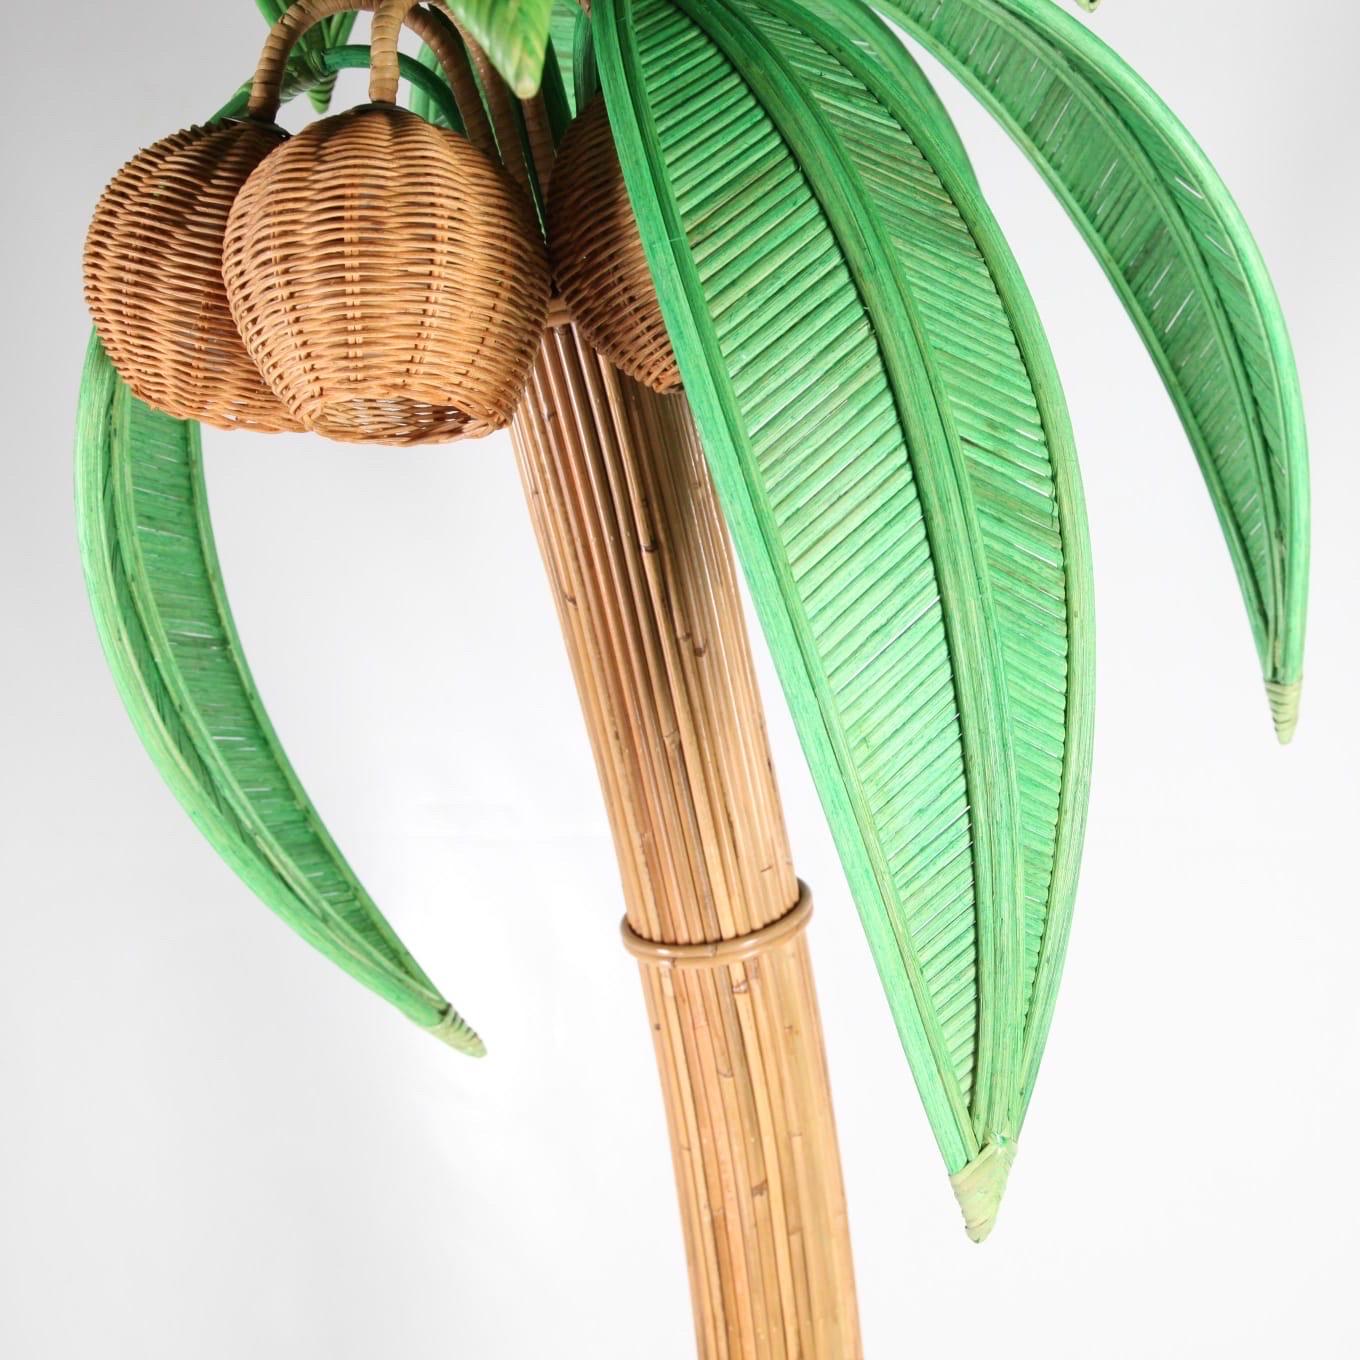 Rattan « coconut tree/palm tree » floor lamp For Sale 2